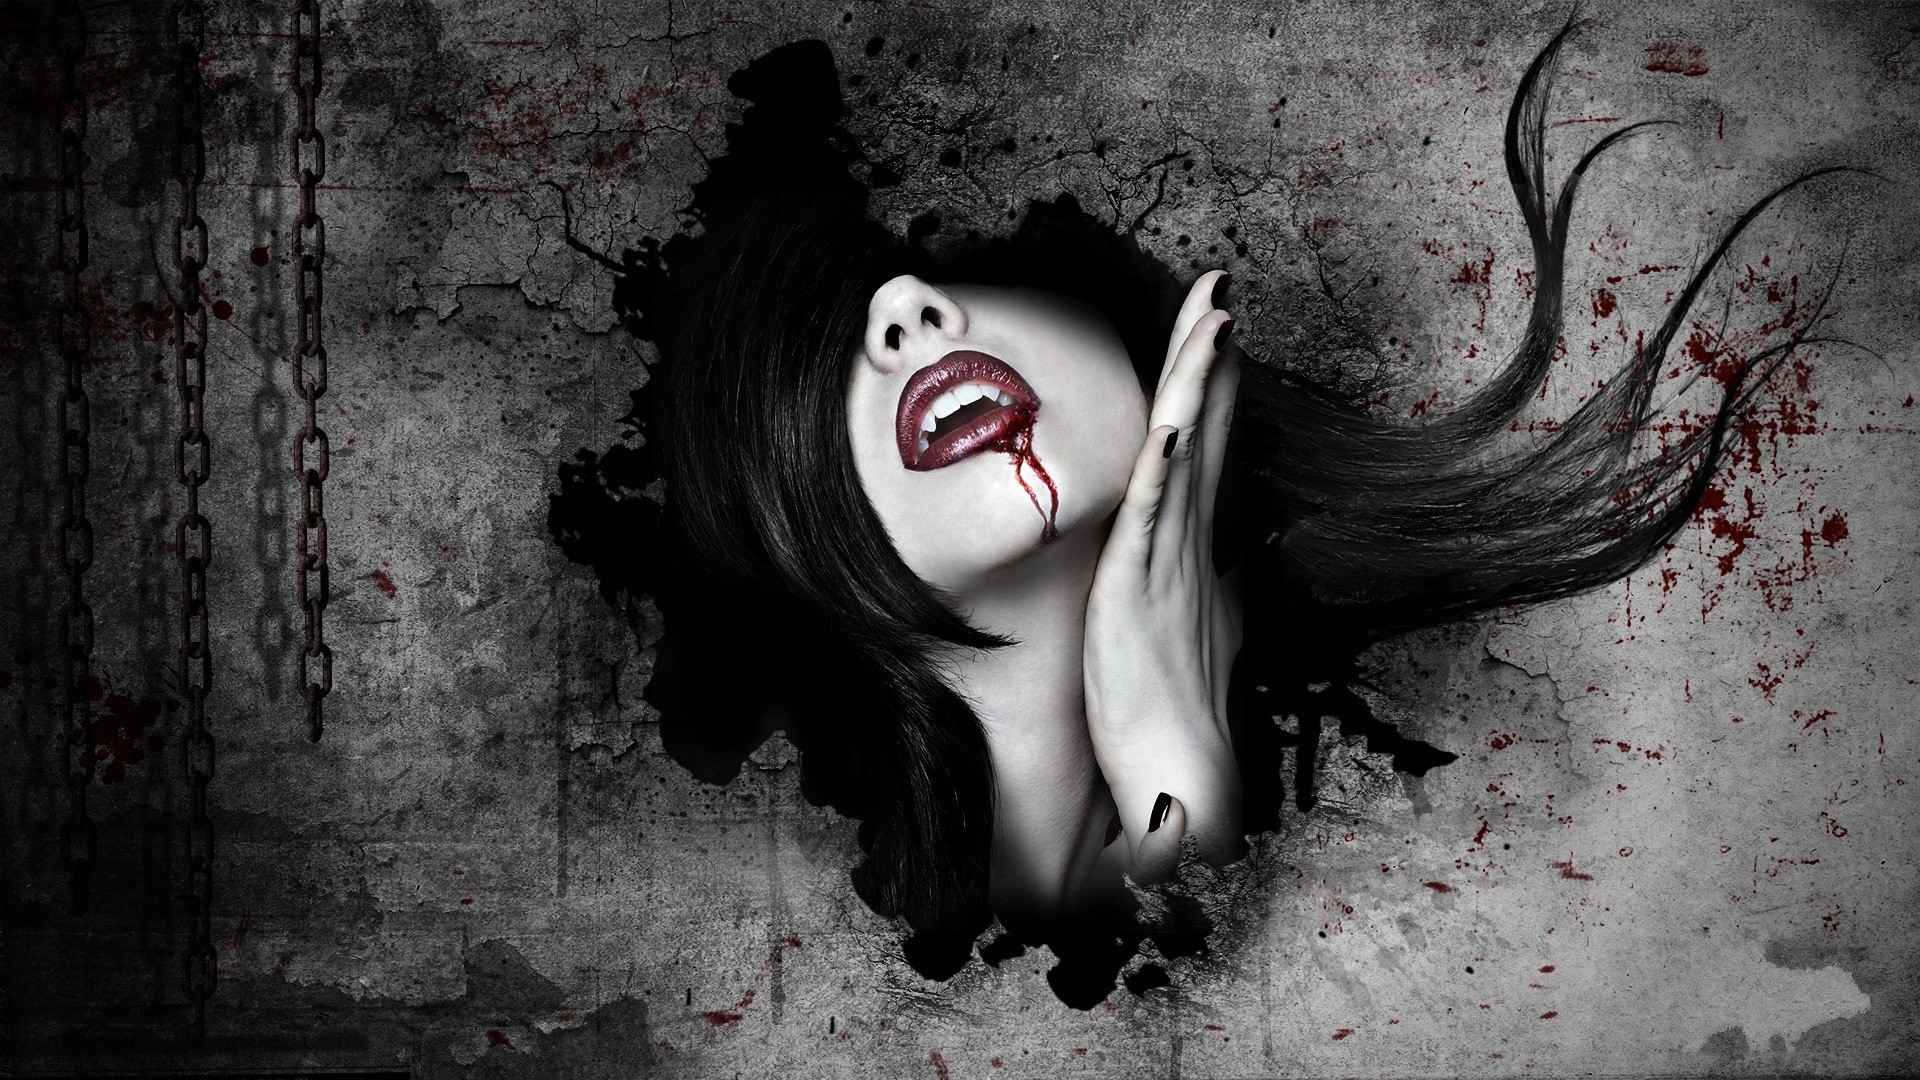 Dark Horror Fantasy Art Gothic Women Vampires Blood Face Wallpaper 1920x1080 31072 Wallpaperup 1920x1080